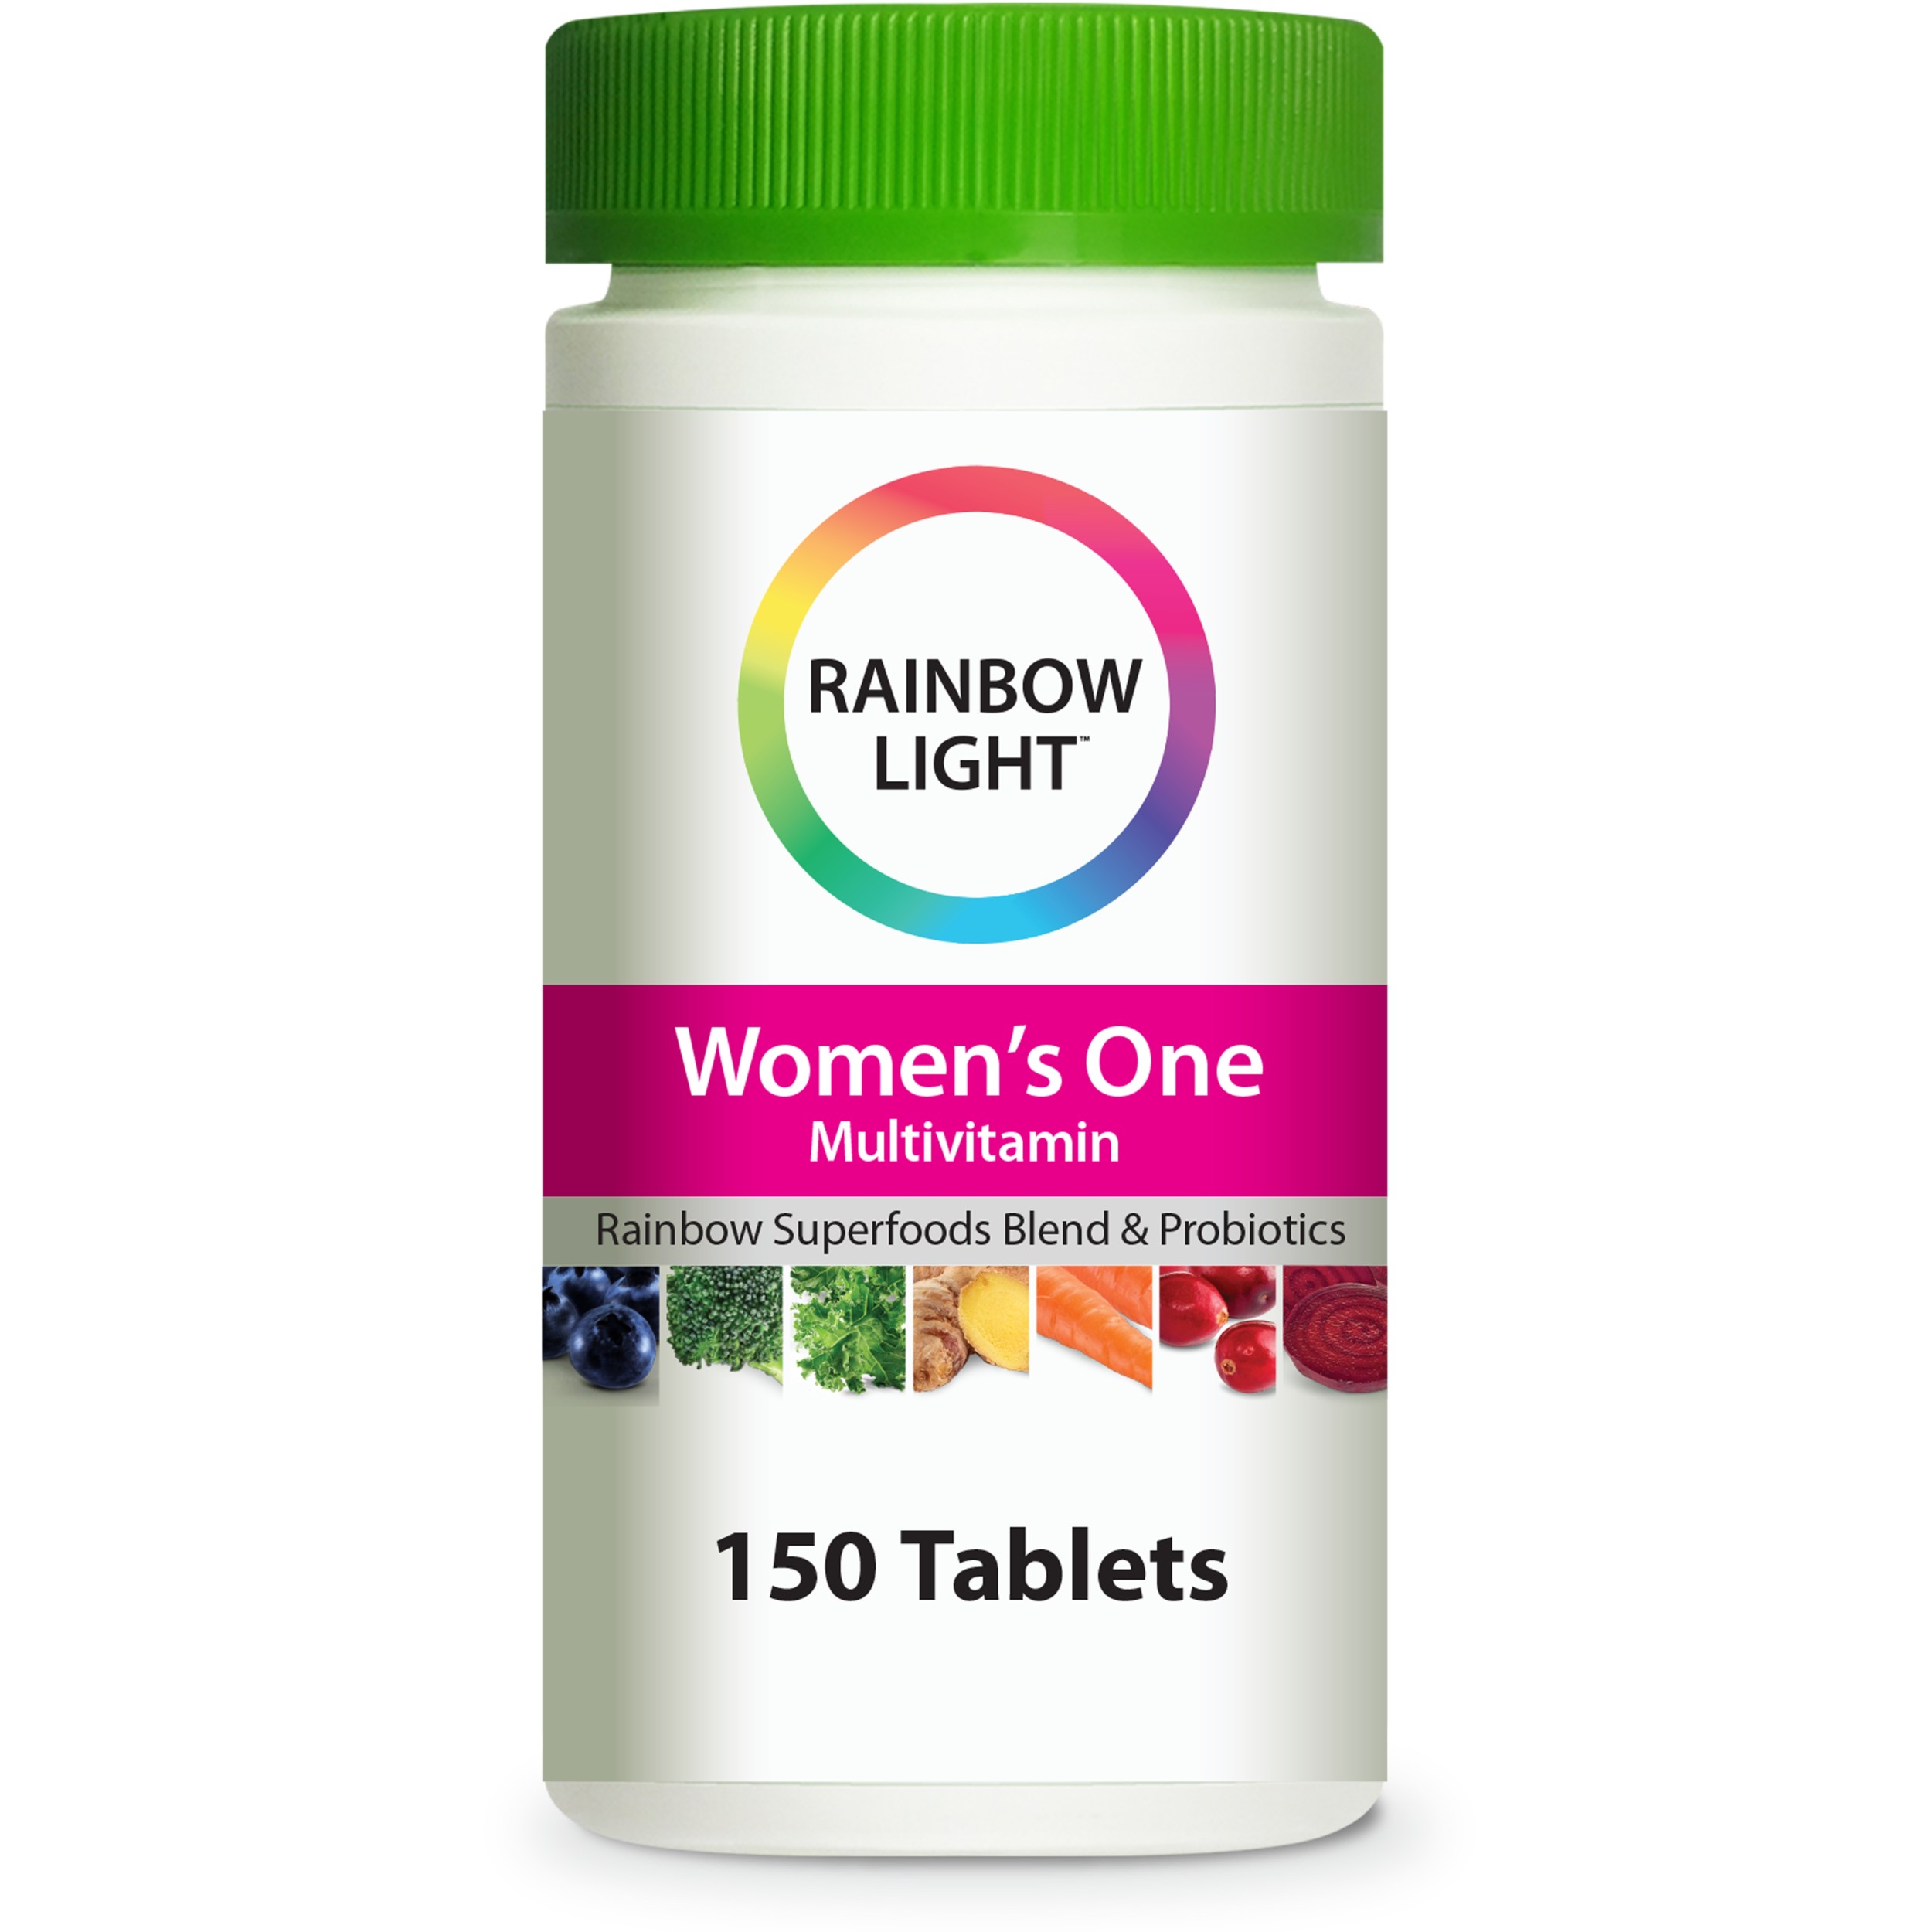 Rainbow Light Women's One Multivitamin, Providing Immune Support for Women's Health - 150 Tablets - image 1 of 19